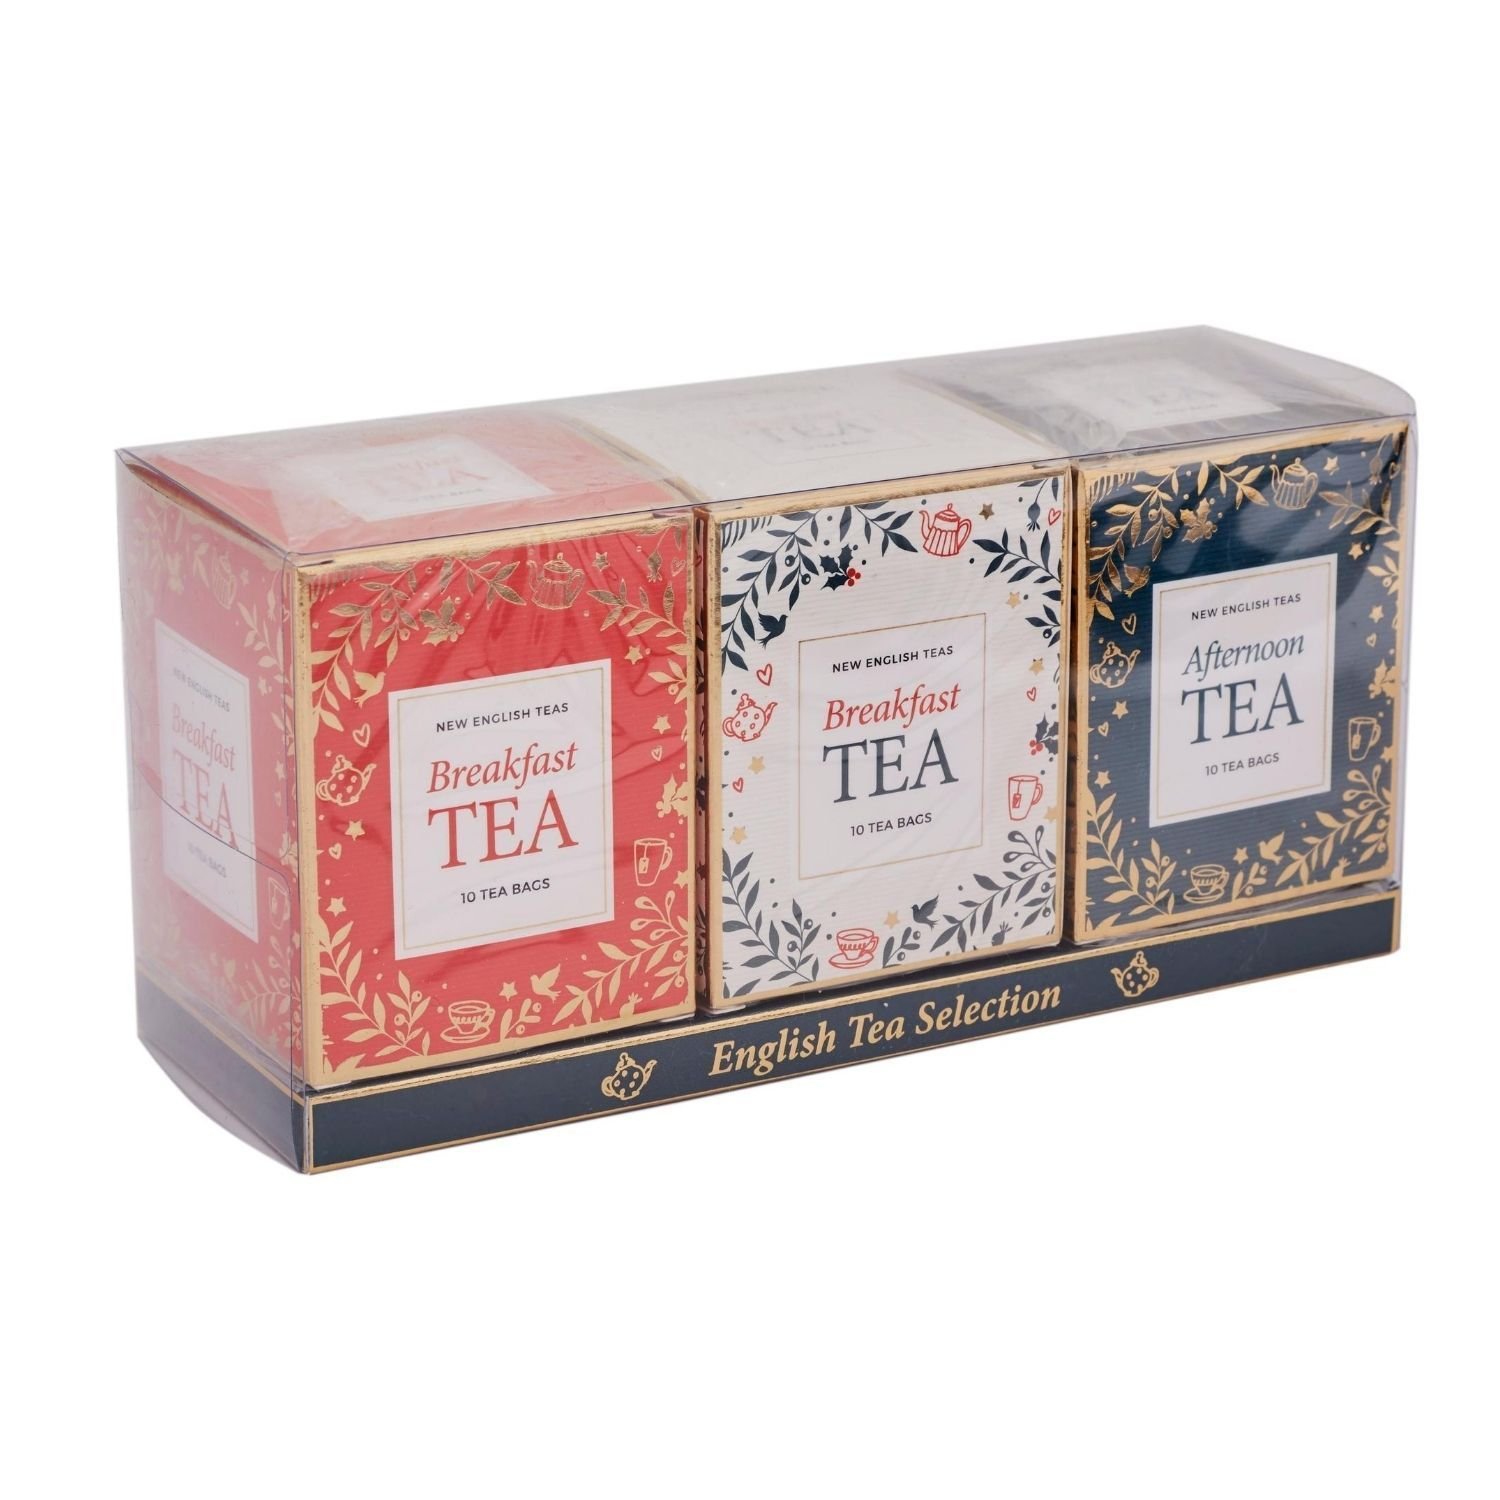 New English Teas čaj krabička PC15, set 3x10 sáčků (3x20g), PREMIUN 3 PACK, NET